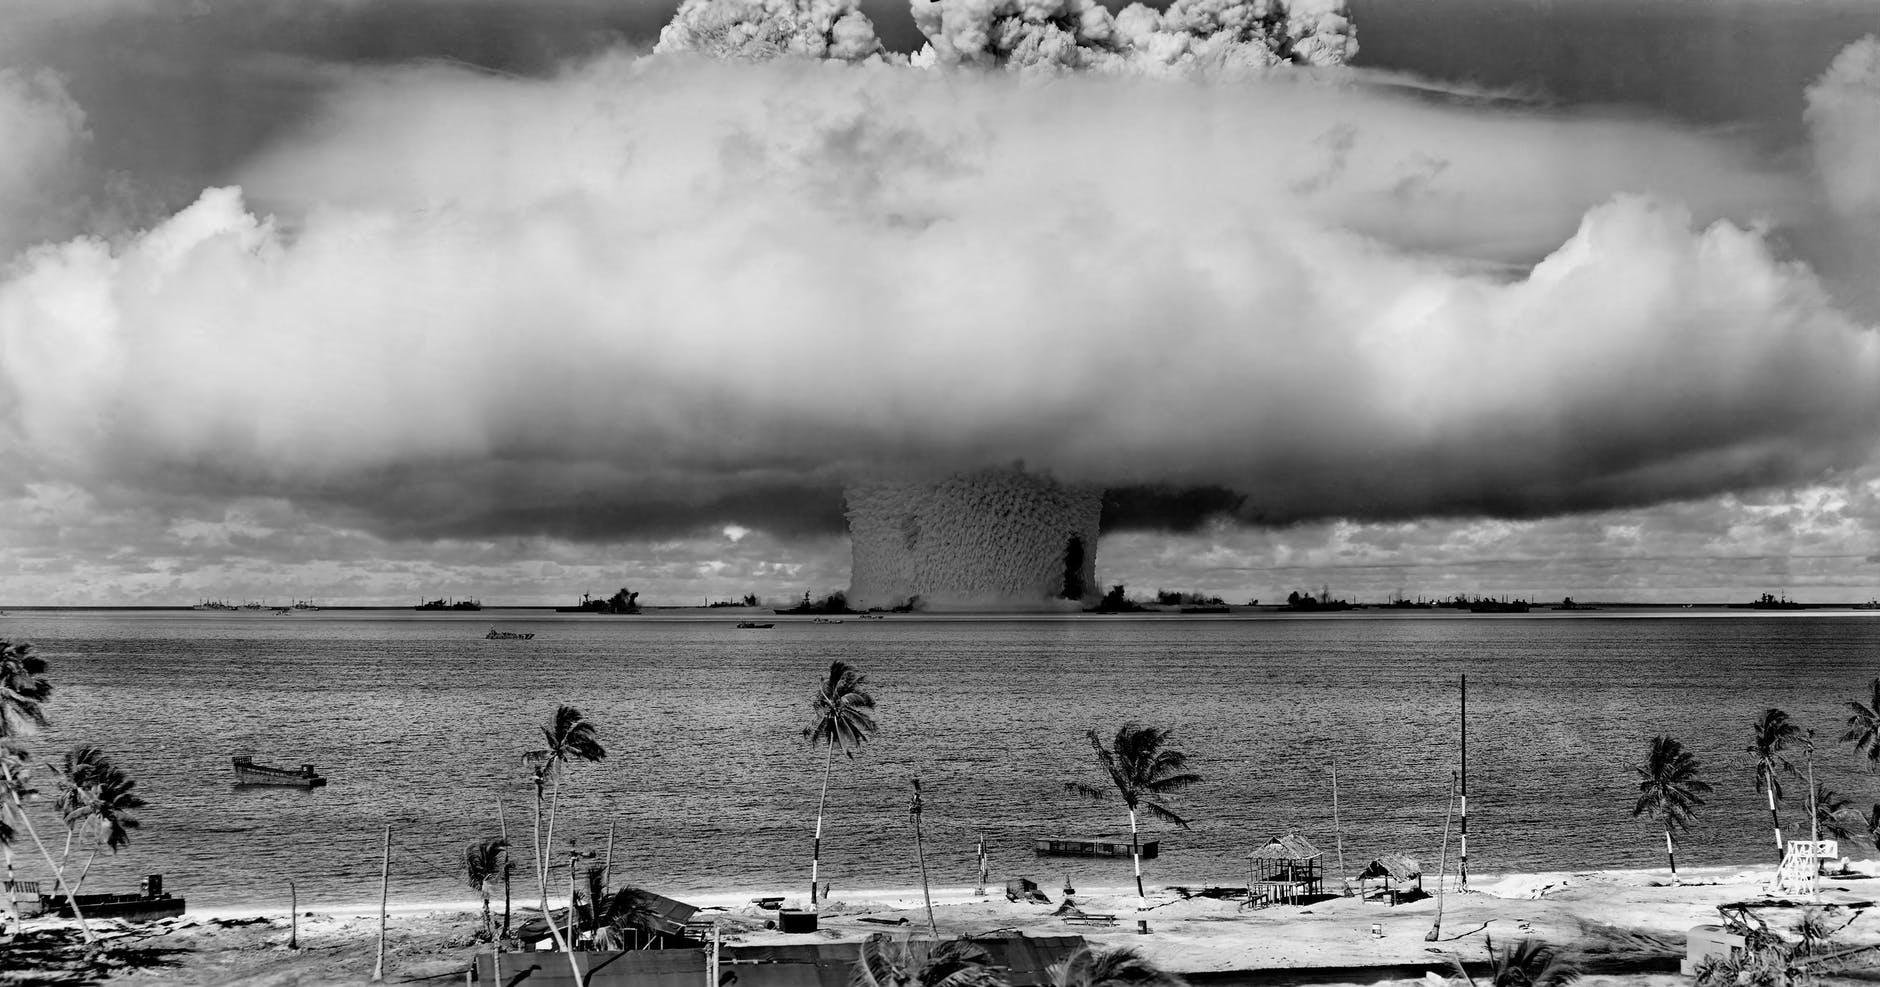 nuclear-weapons-test-nuclear-weapon-weapons-test-explosion-73909